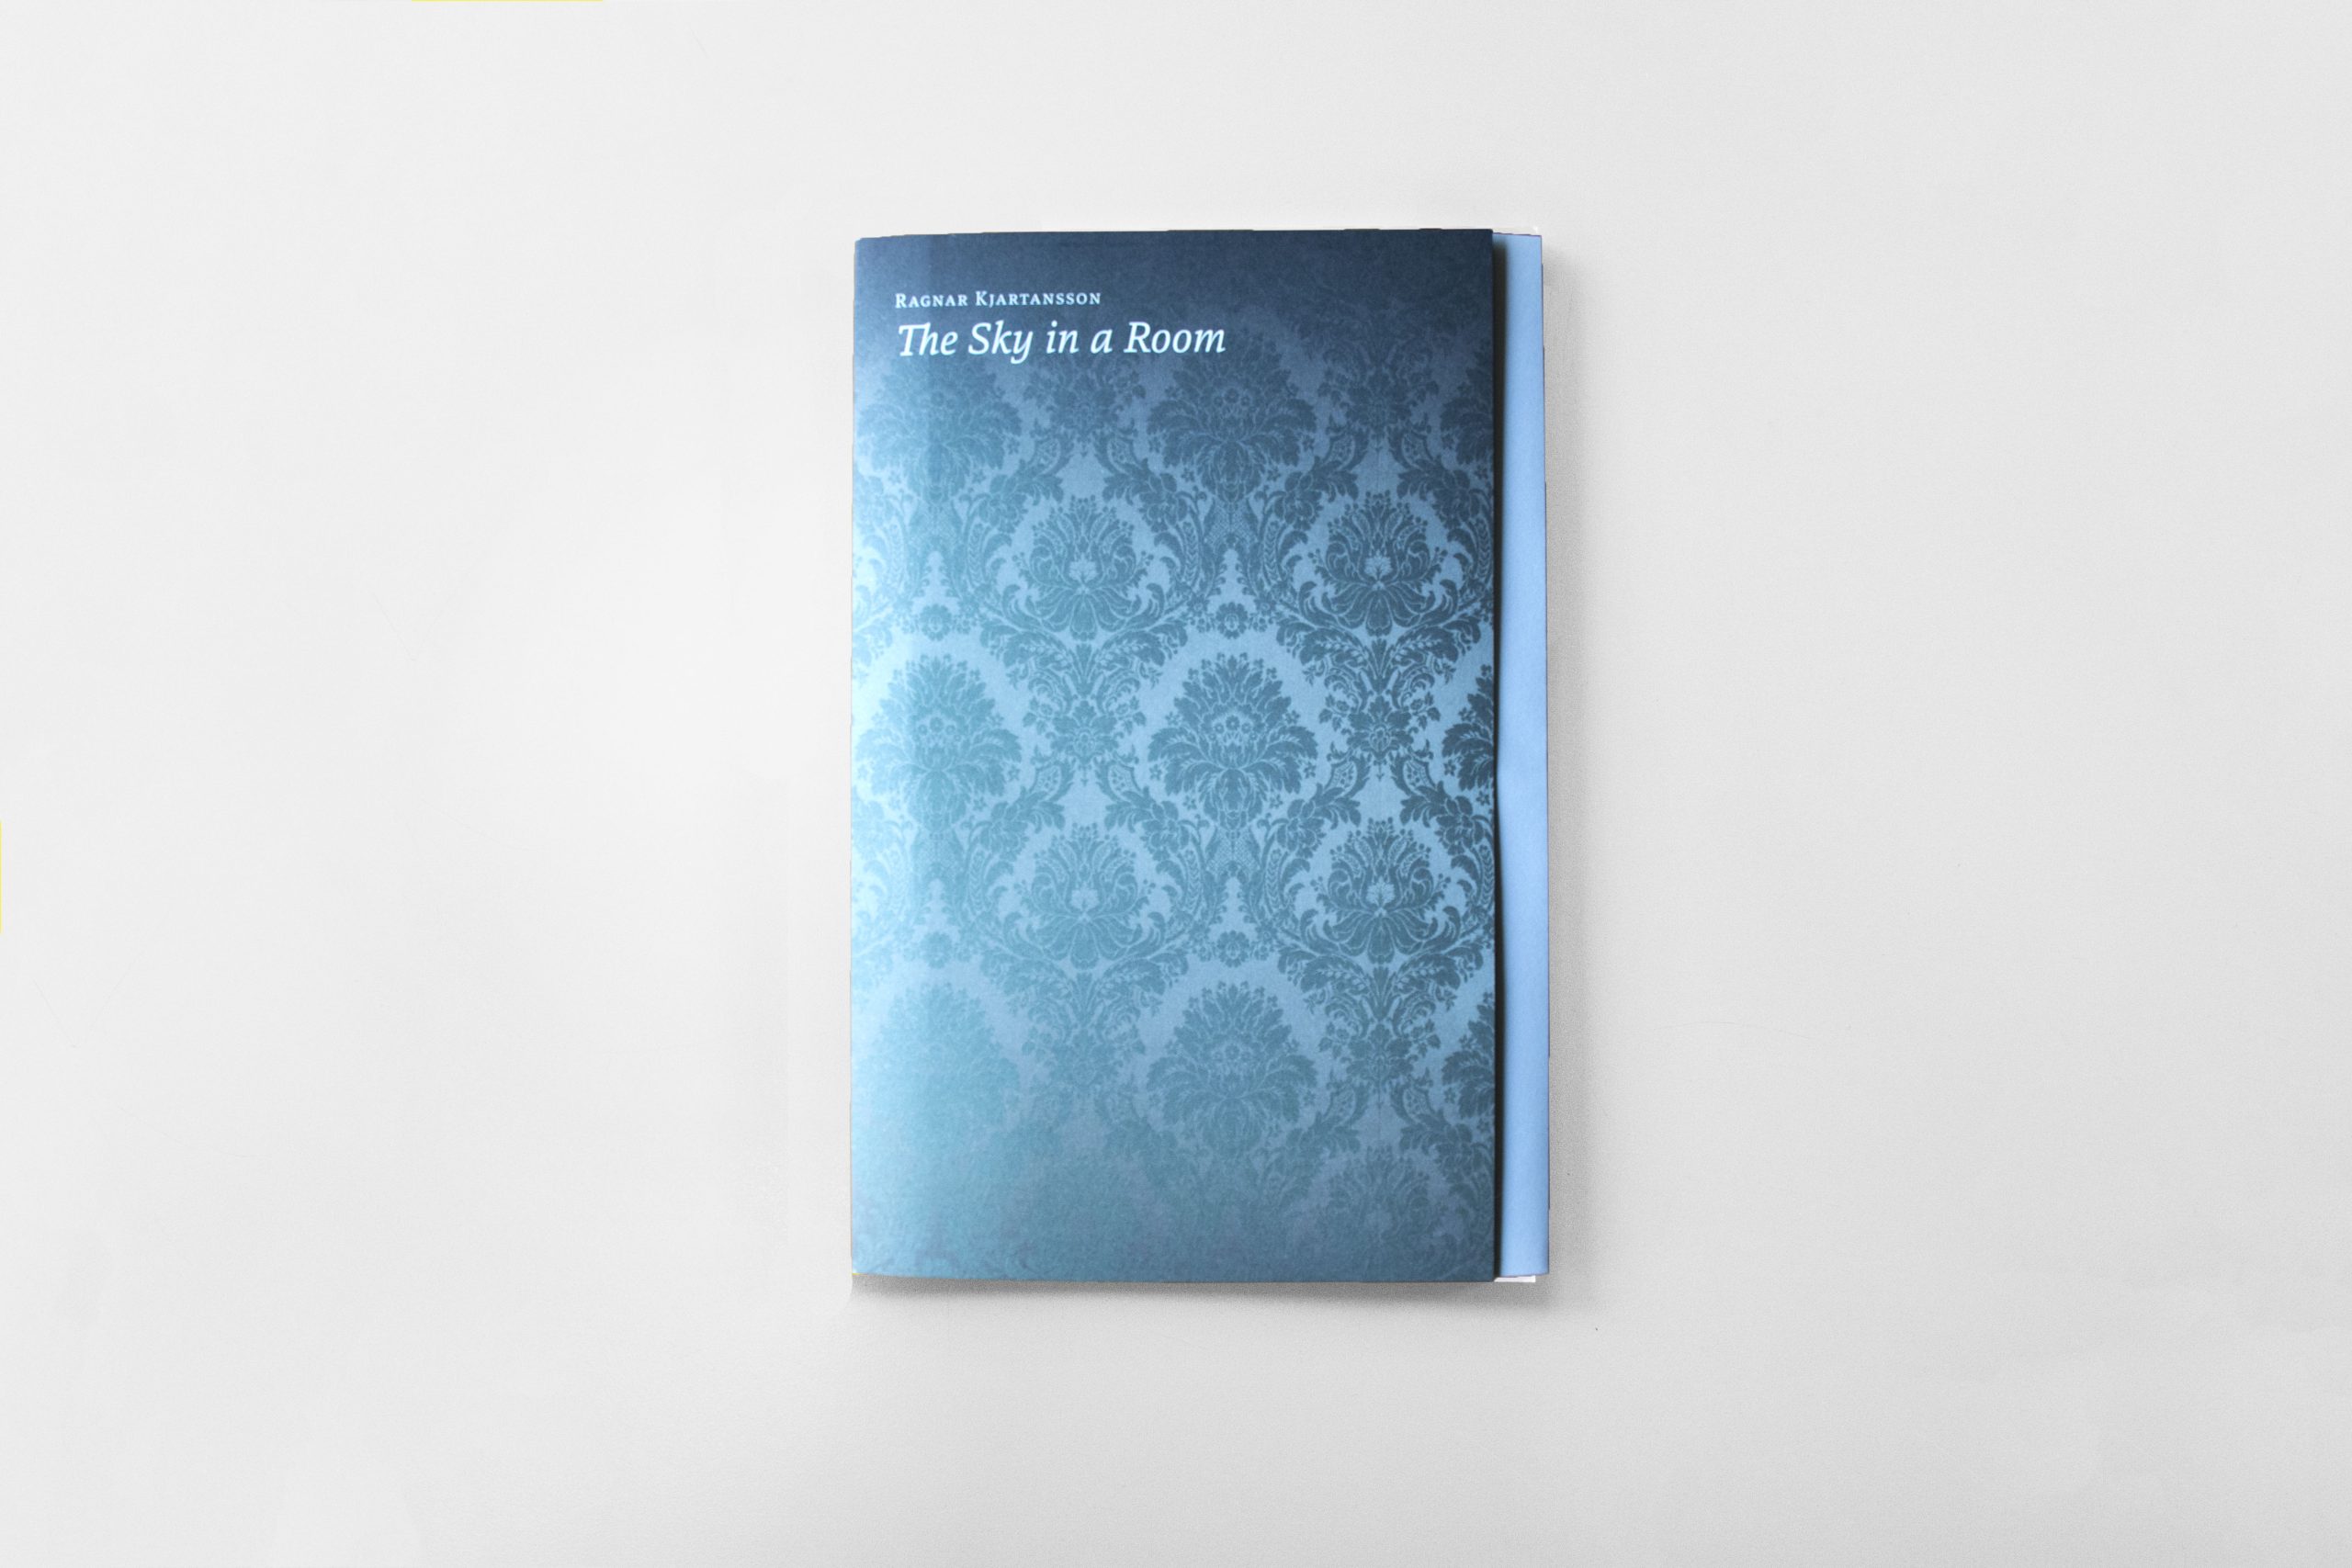 Ragnar Kjartansson Booklet, frot conver featuring teal blue ornate paterning.